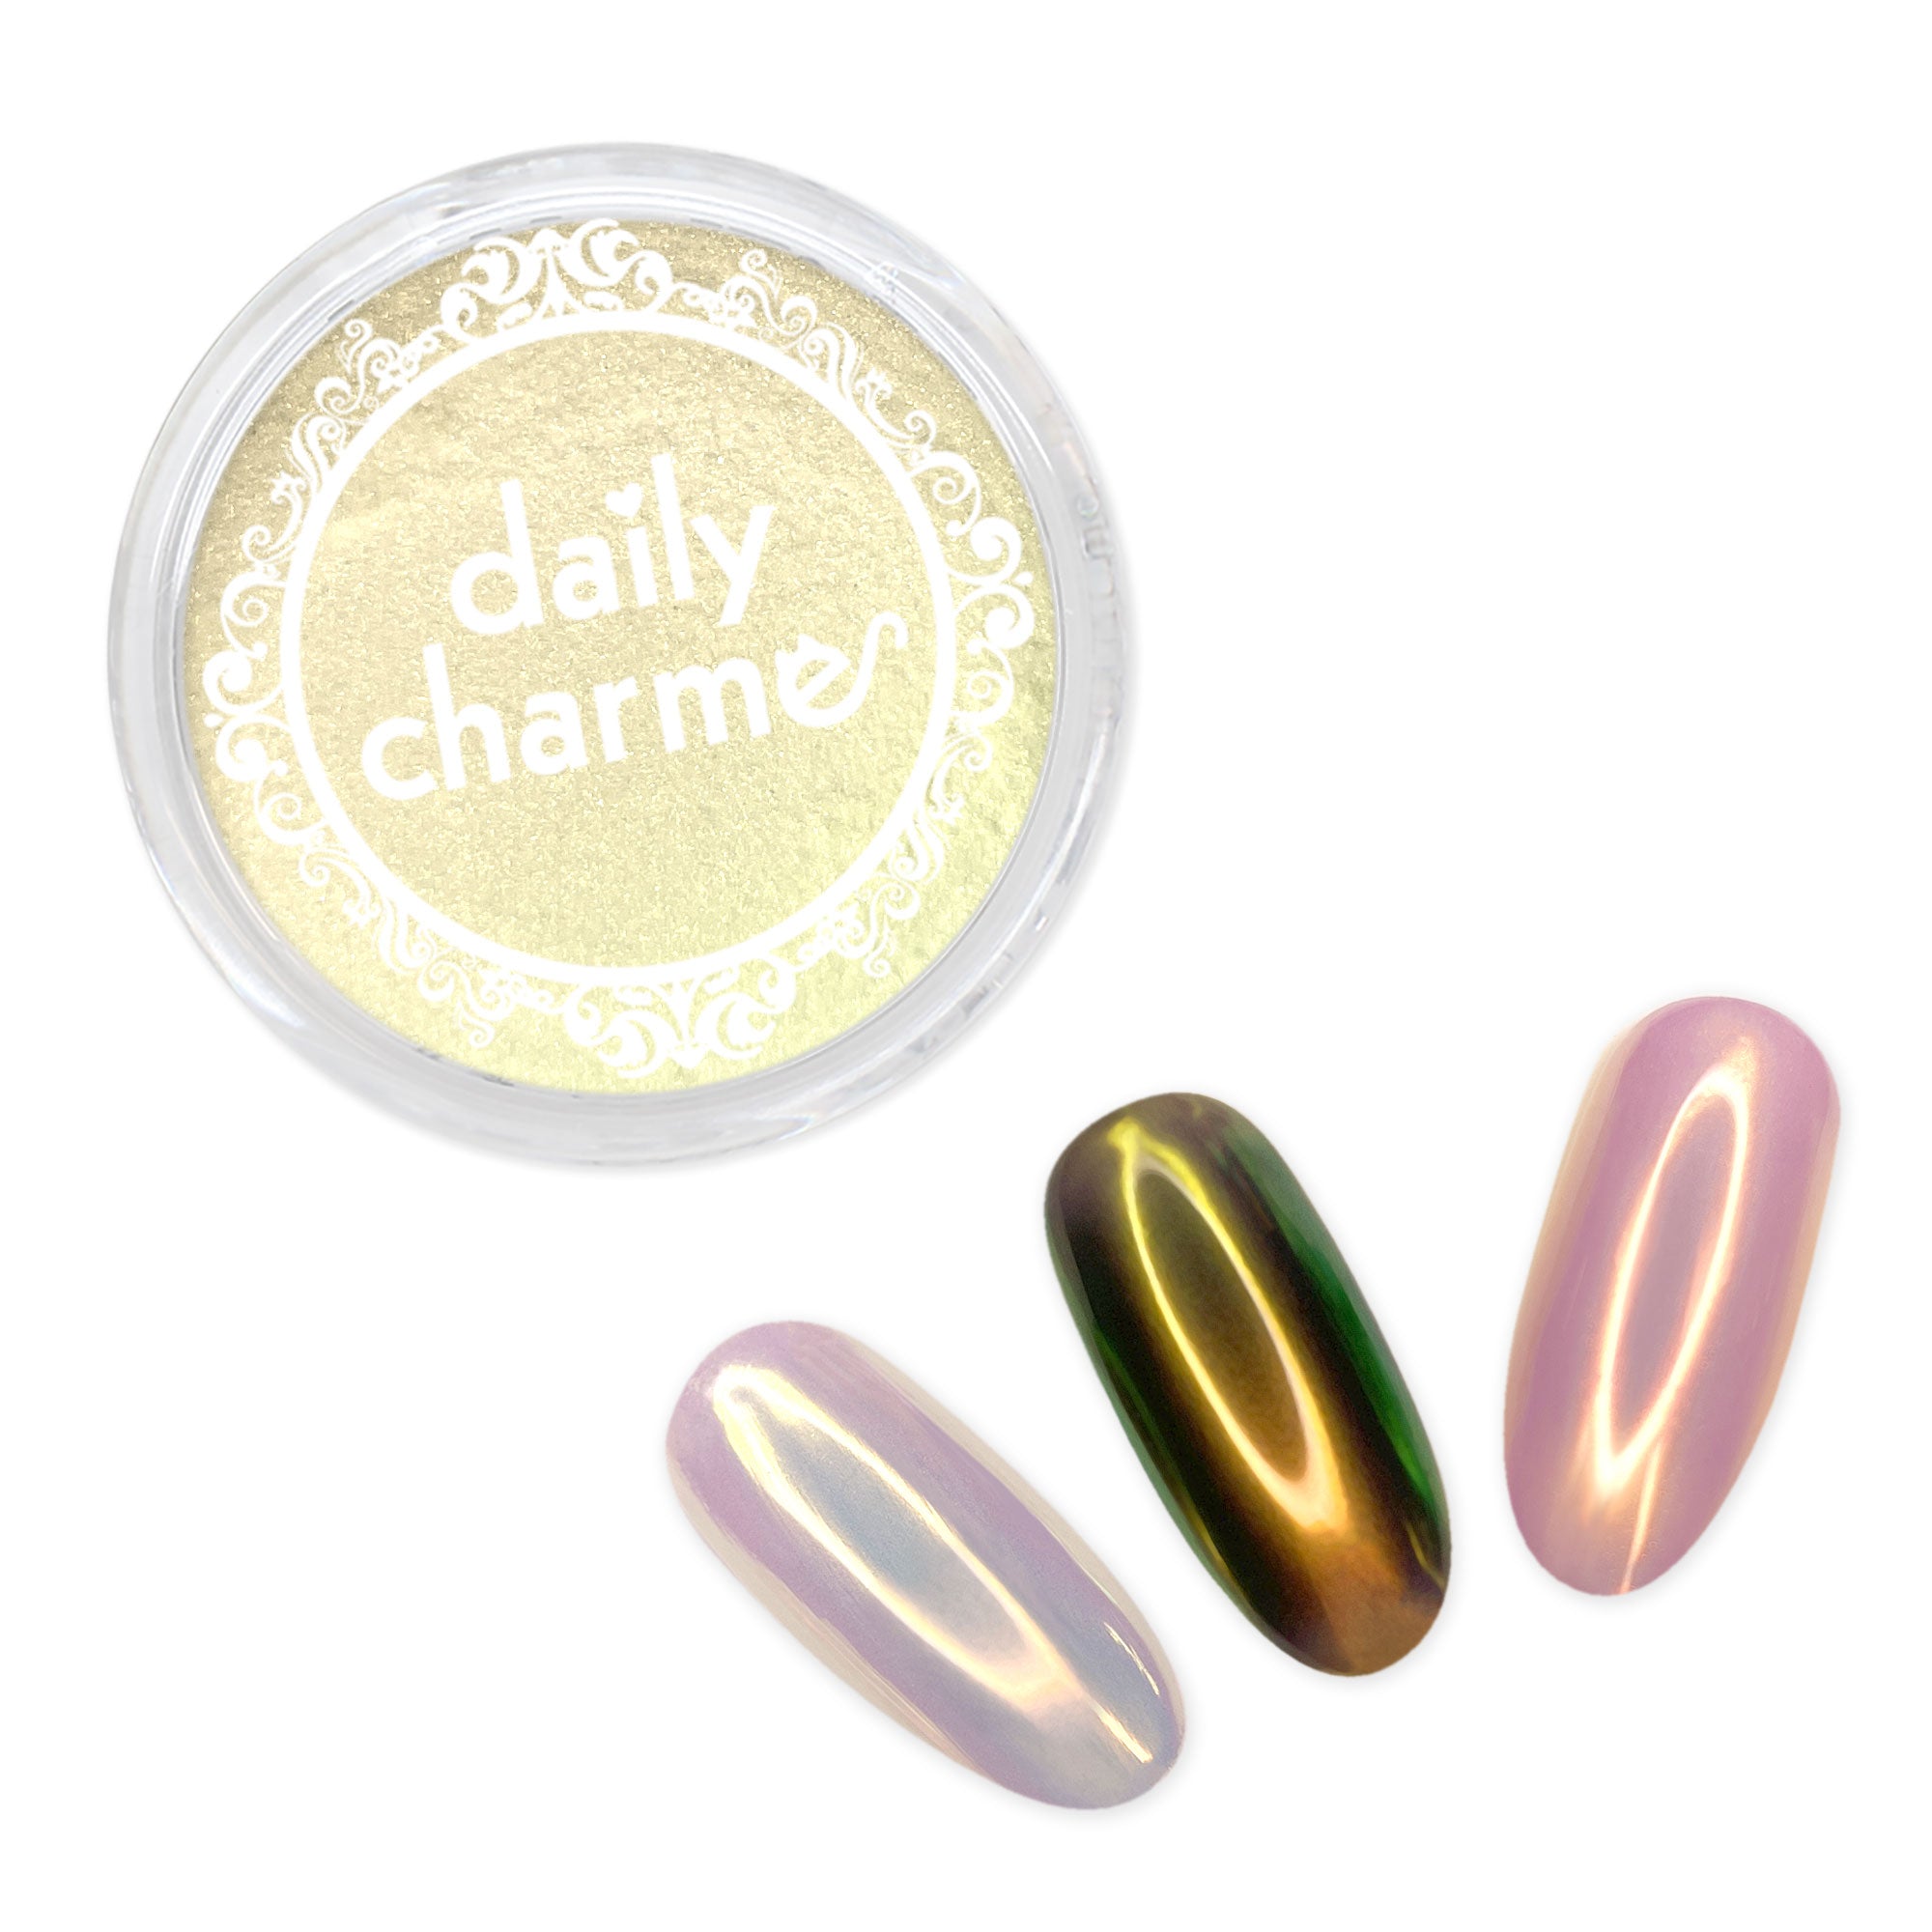 Rose Gold Chrome Powder Nail Art – Daily Charme